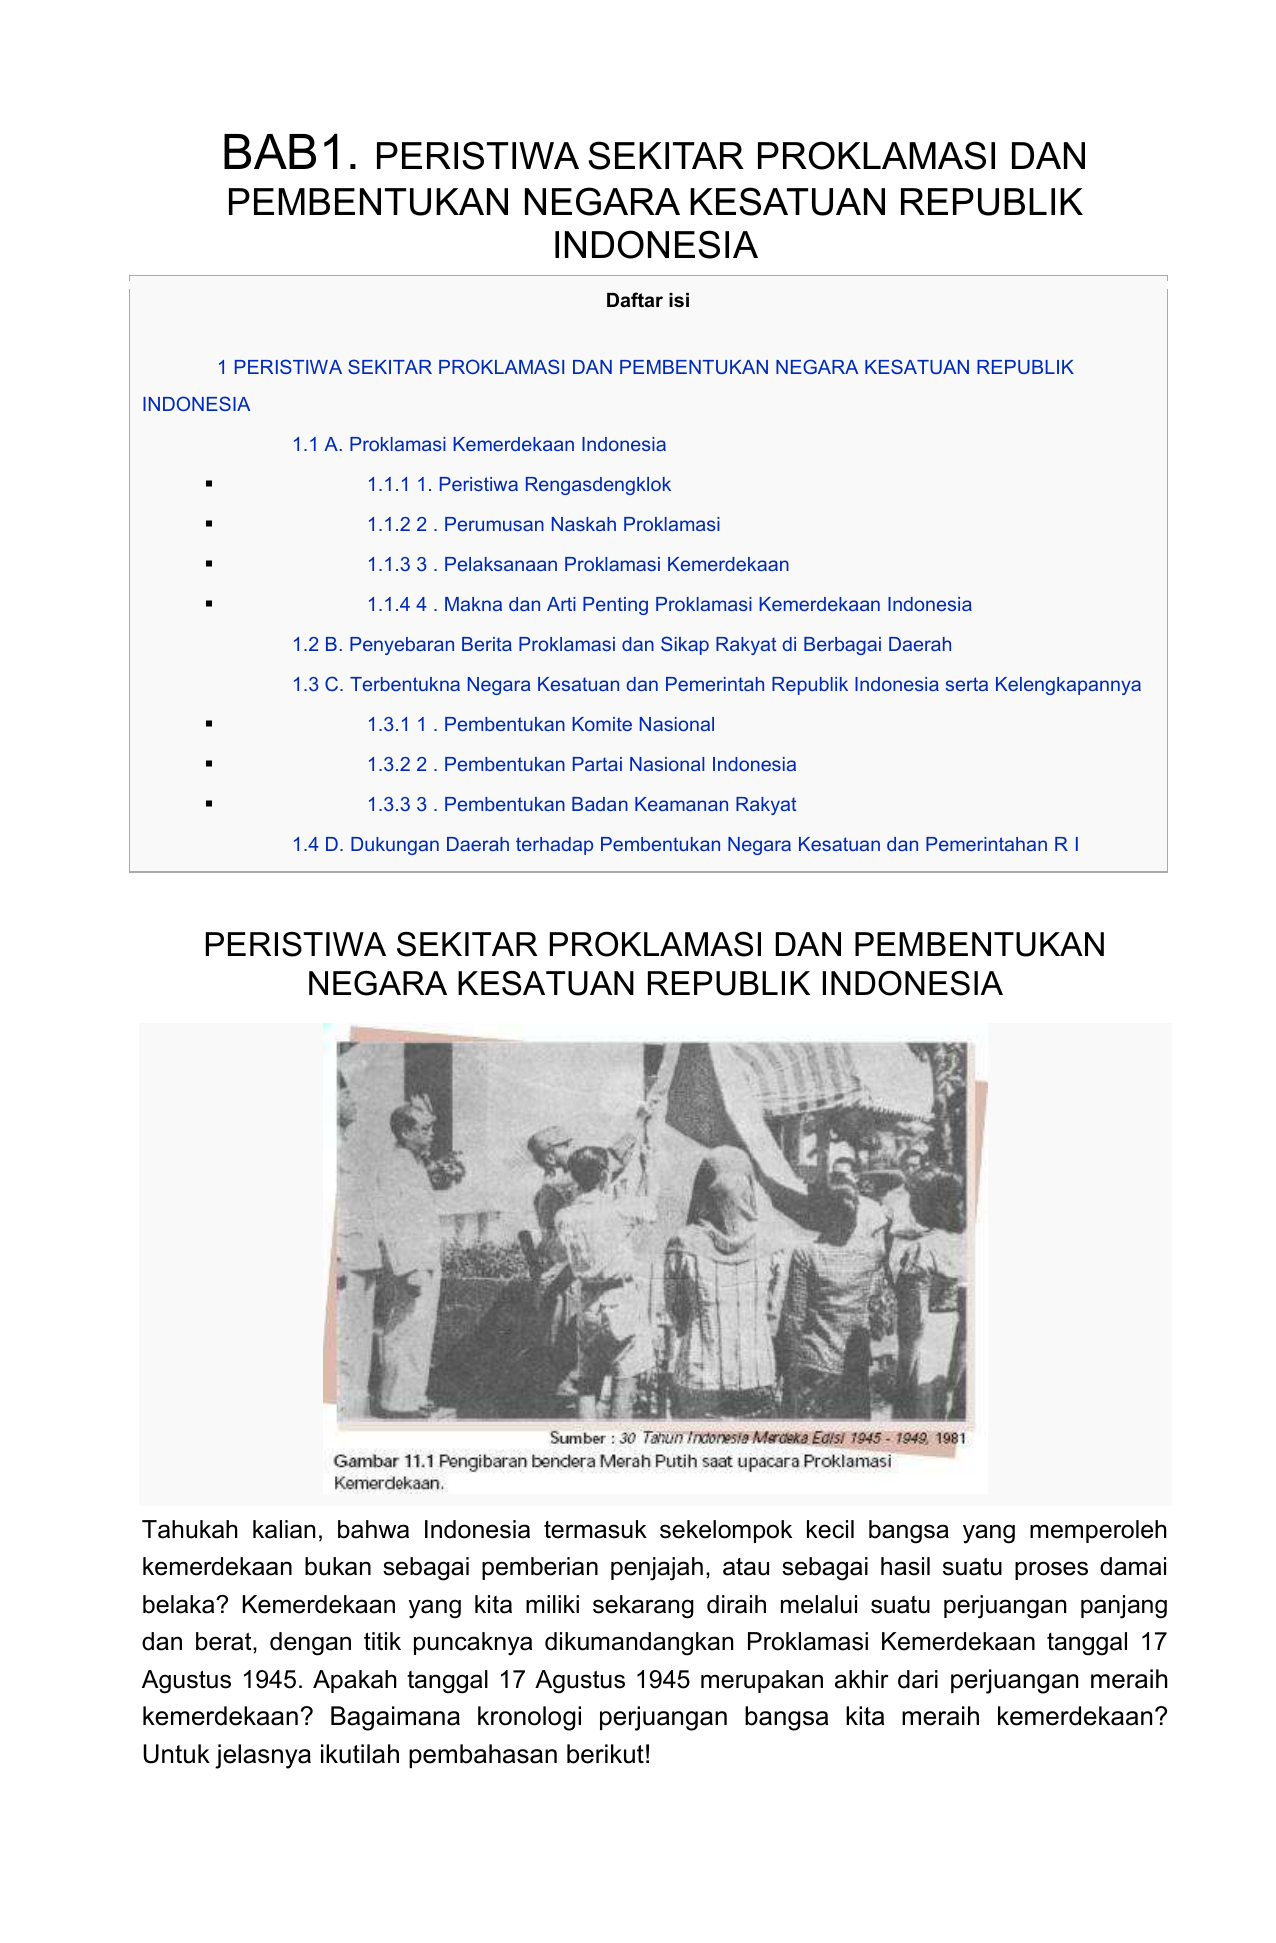 PERISTIWA SEKITAR PROKLAMASI DAN PEMBENTUKAN NEGARA KESATUAN REPUBLIK INDONESIA Daftar isi 1 PERISTIWA SEKITAR PROKLAMASI DAN PEMBENTUKAN NEGARA KESATUAN